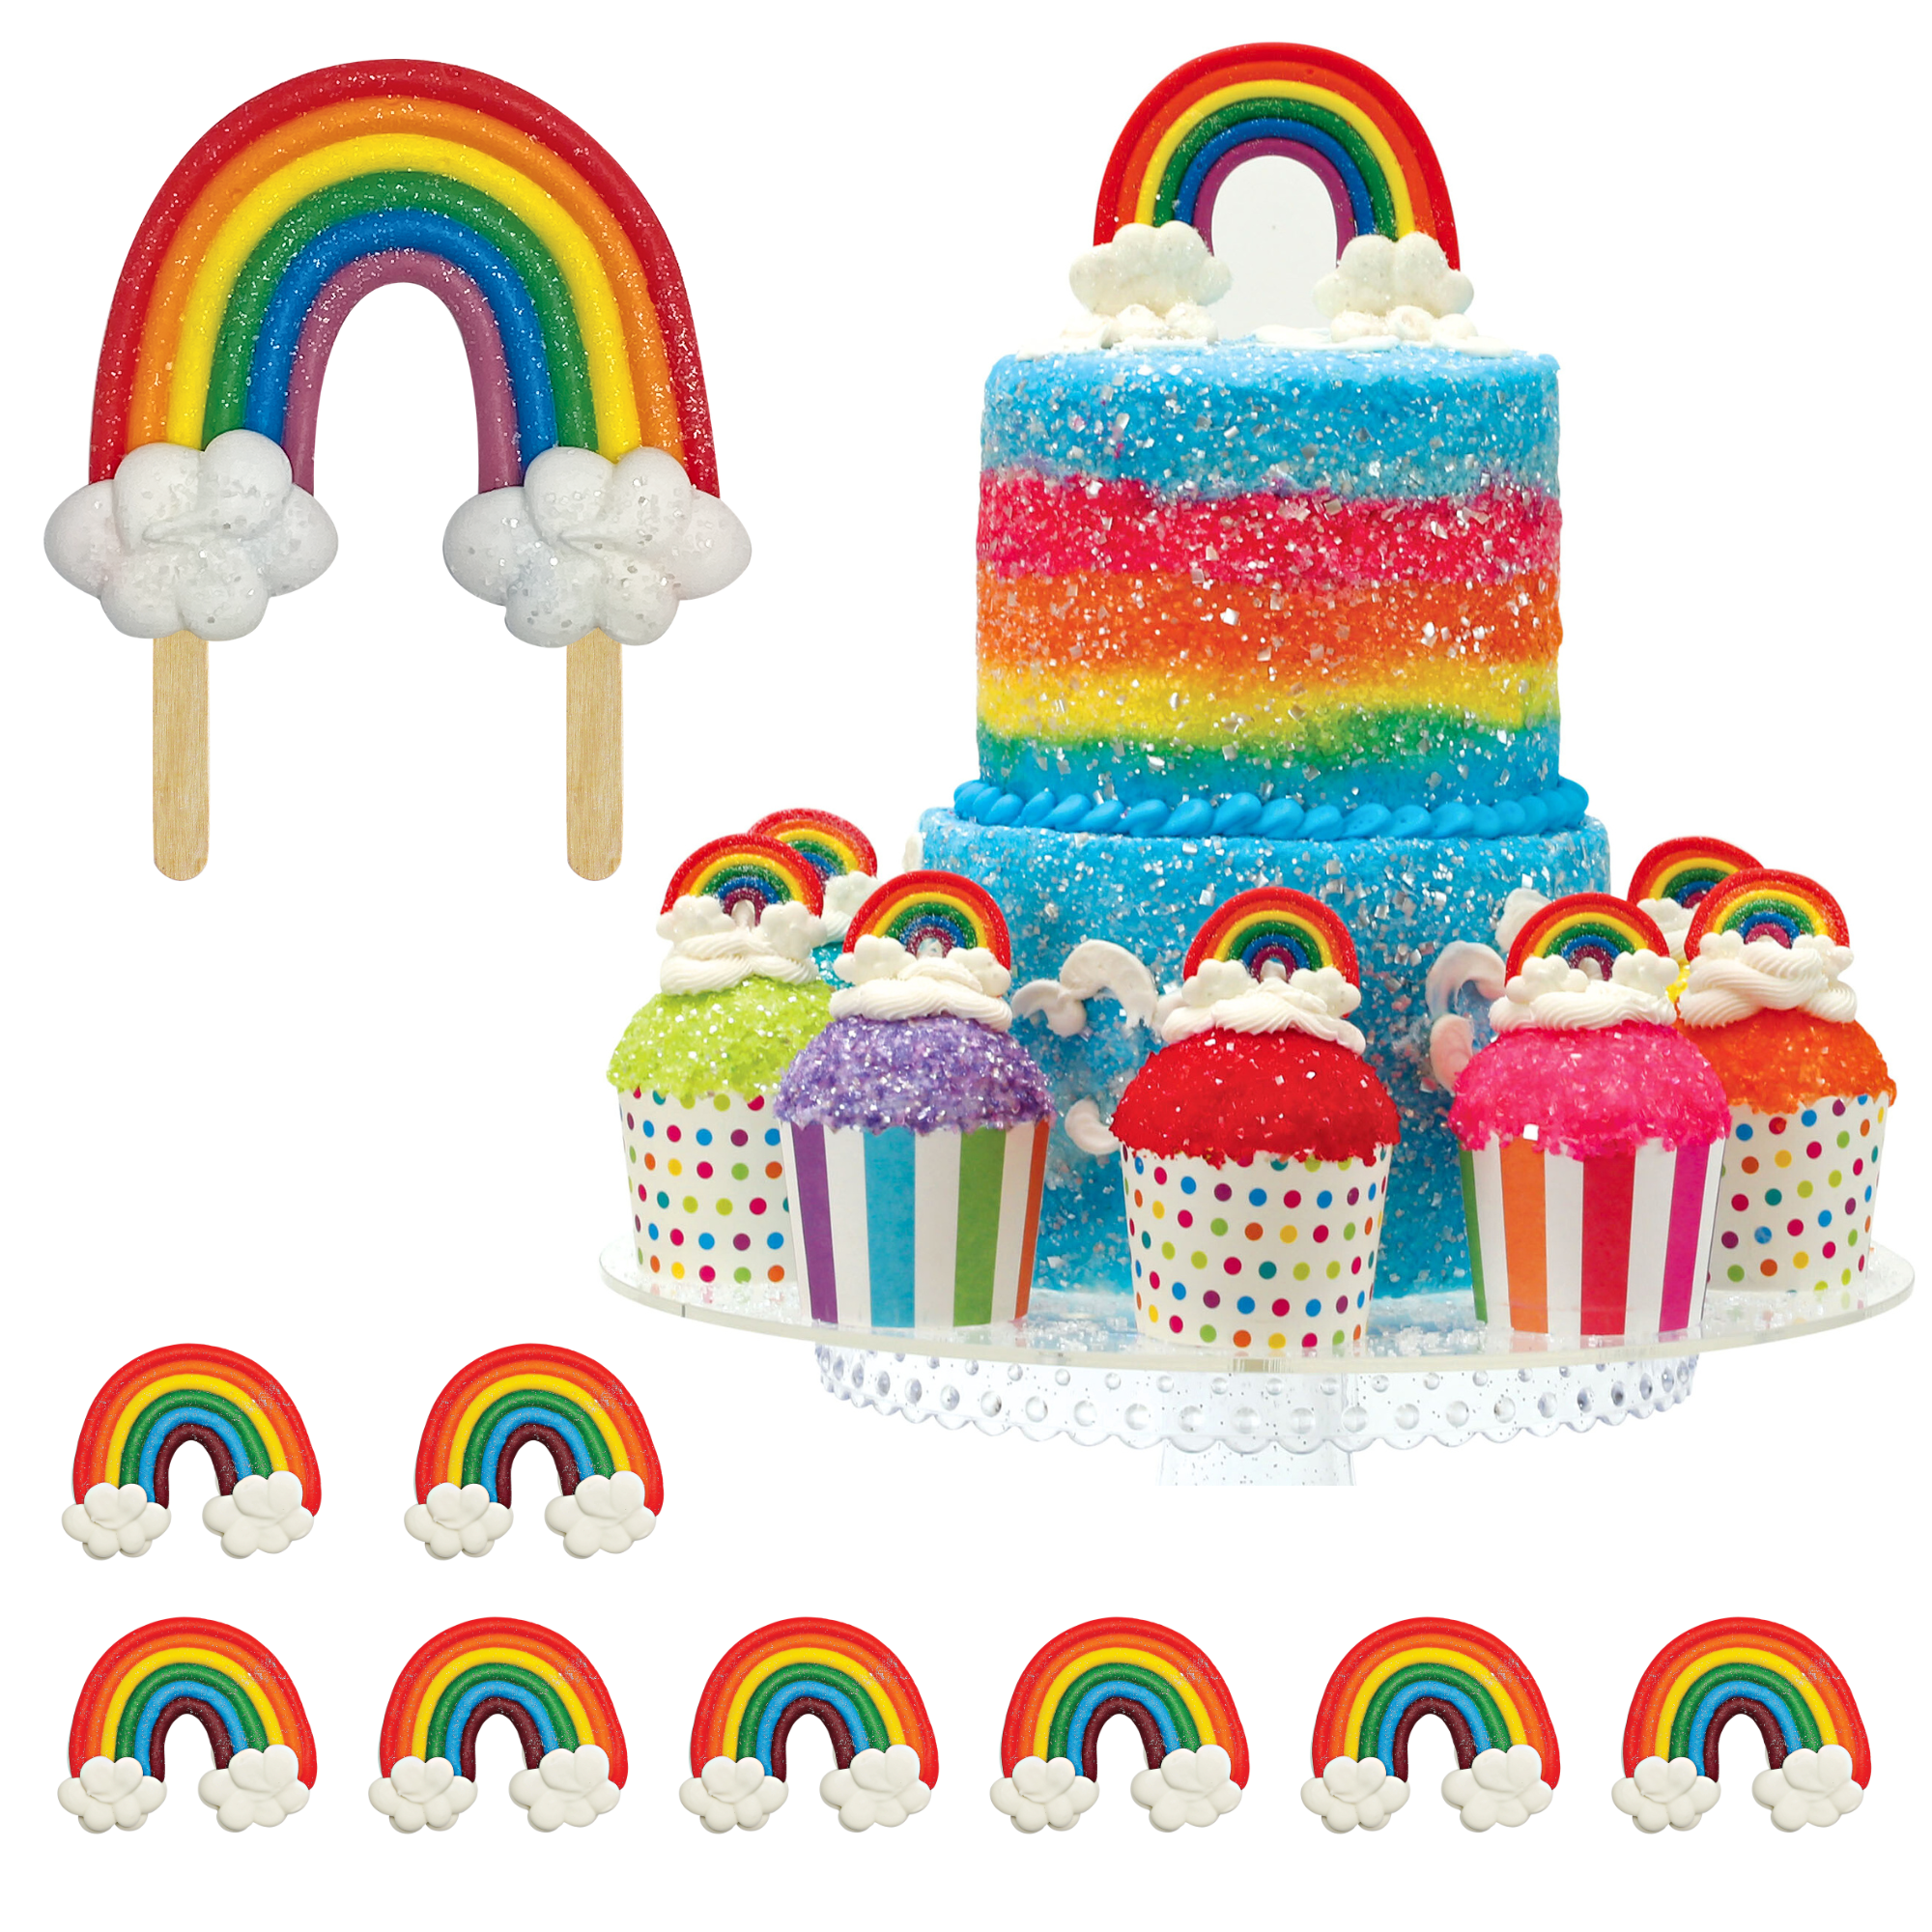 Rainbow Designer Cake Decor